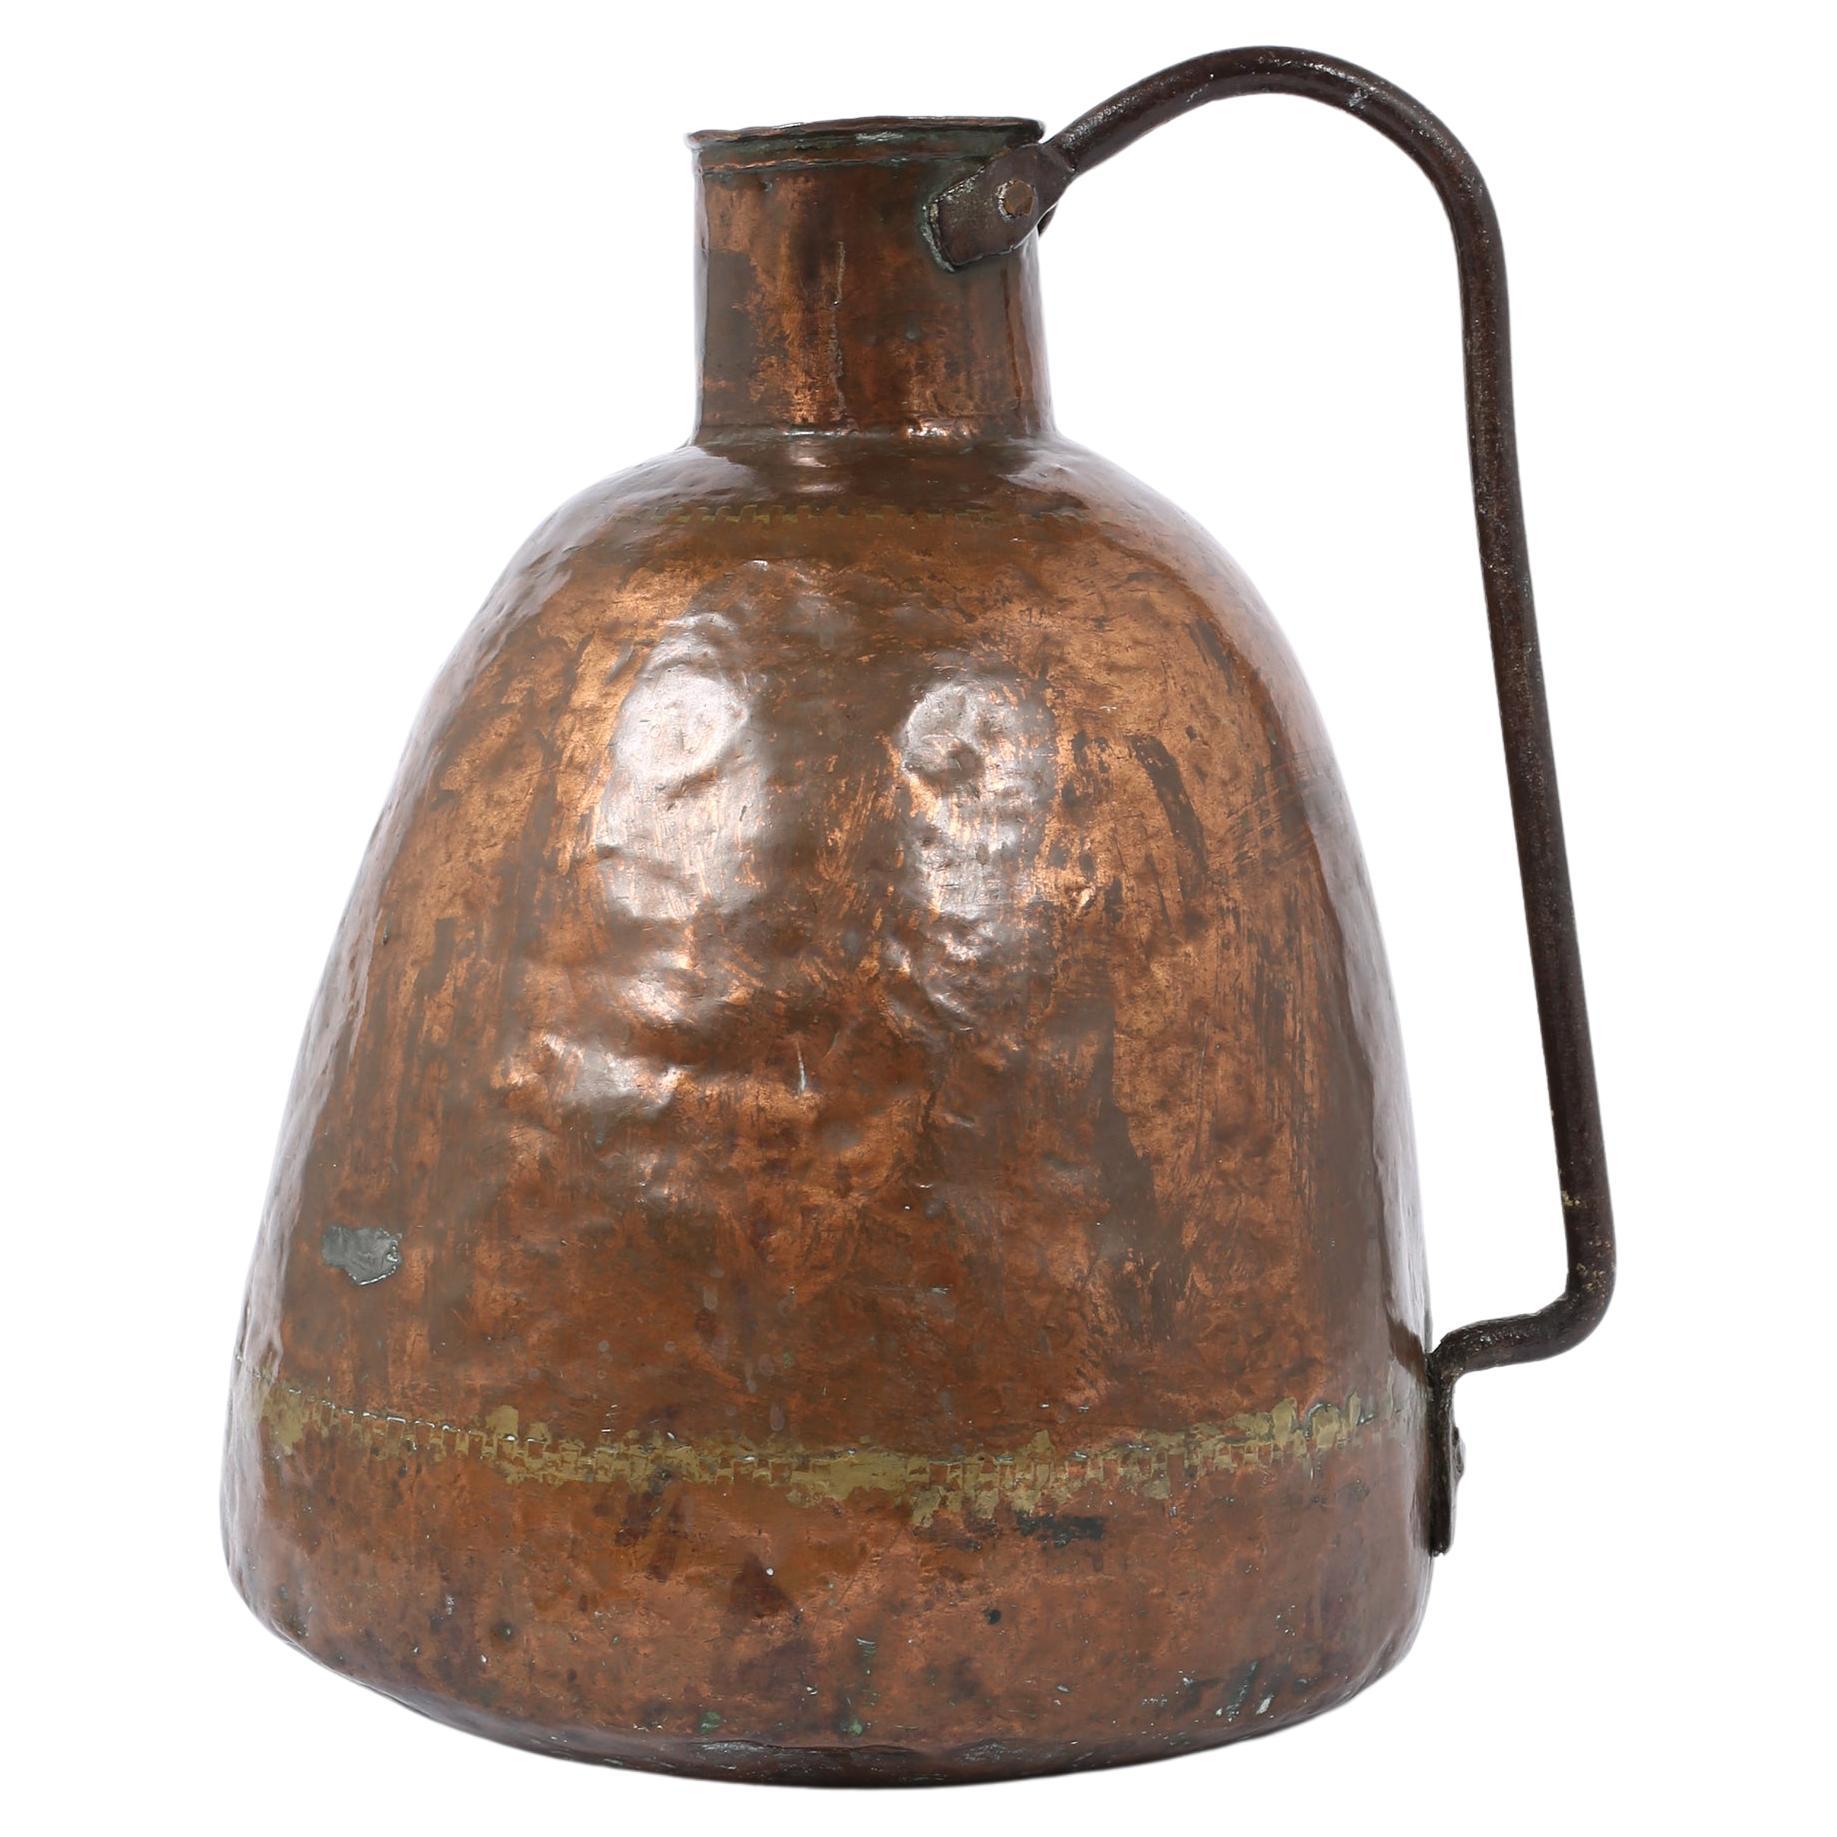 19th Century Copper & Iron Water Vessel, Algerian, c. 1890